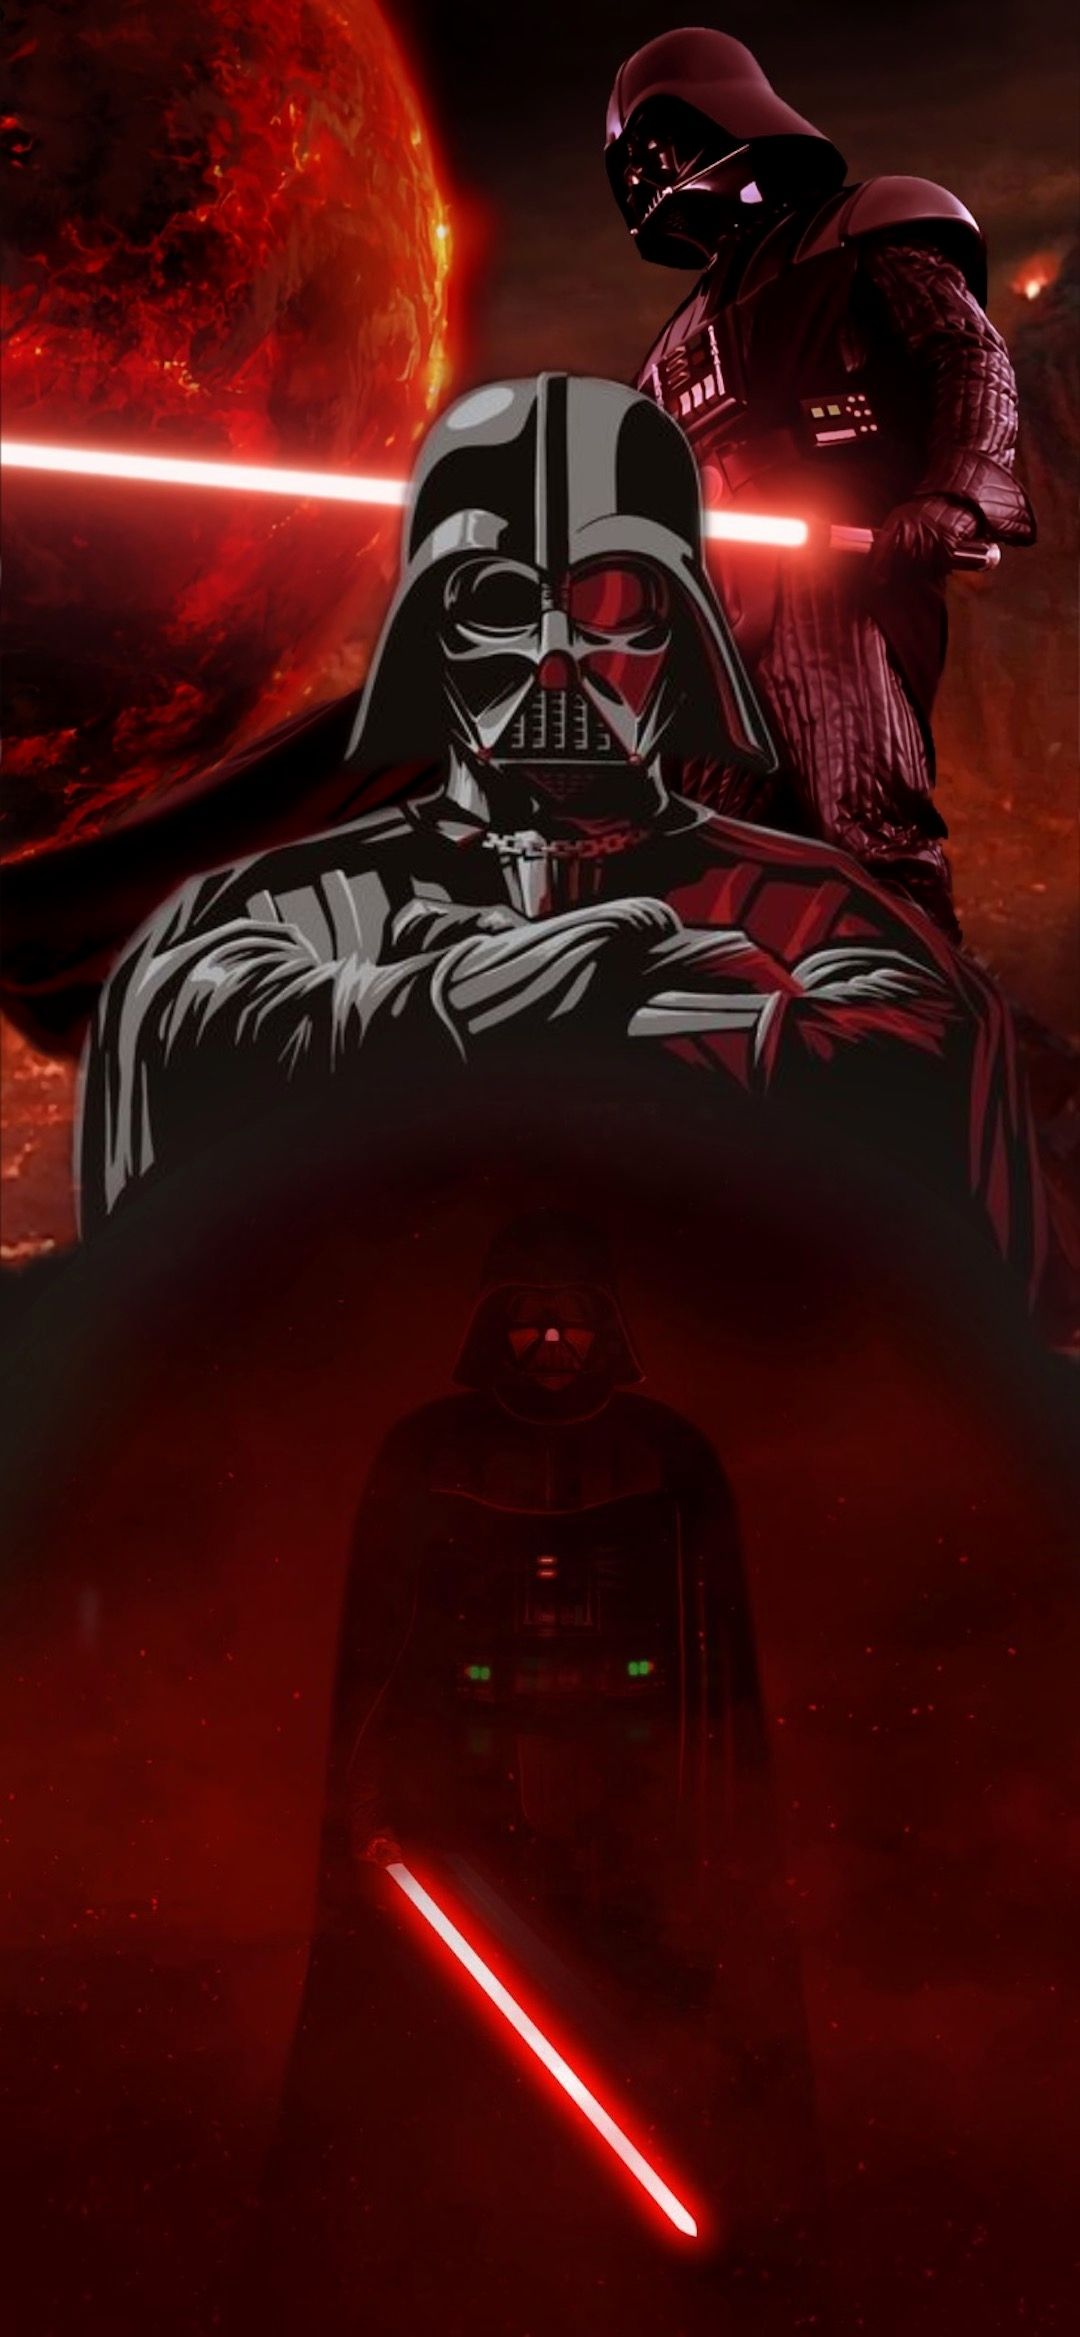 Darth Vader 4k iPhone Wallpapers - Wallpaper Cave